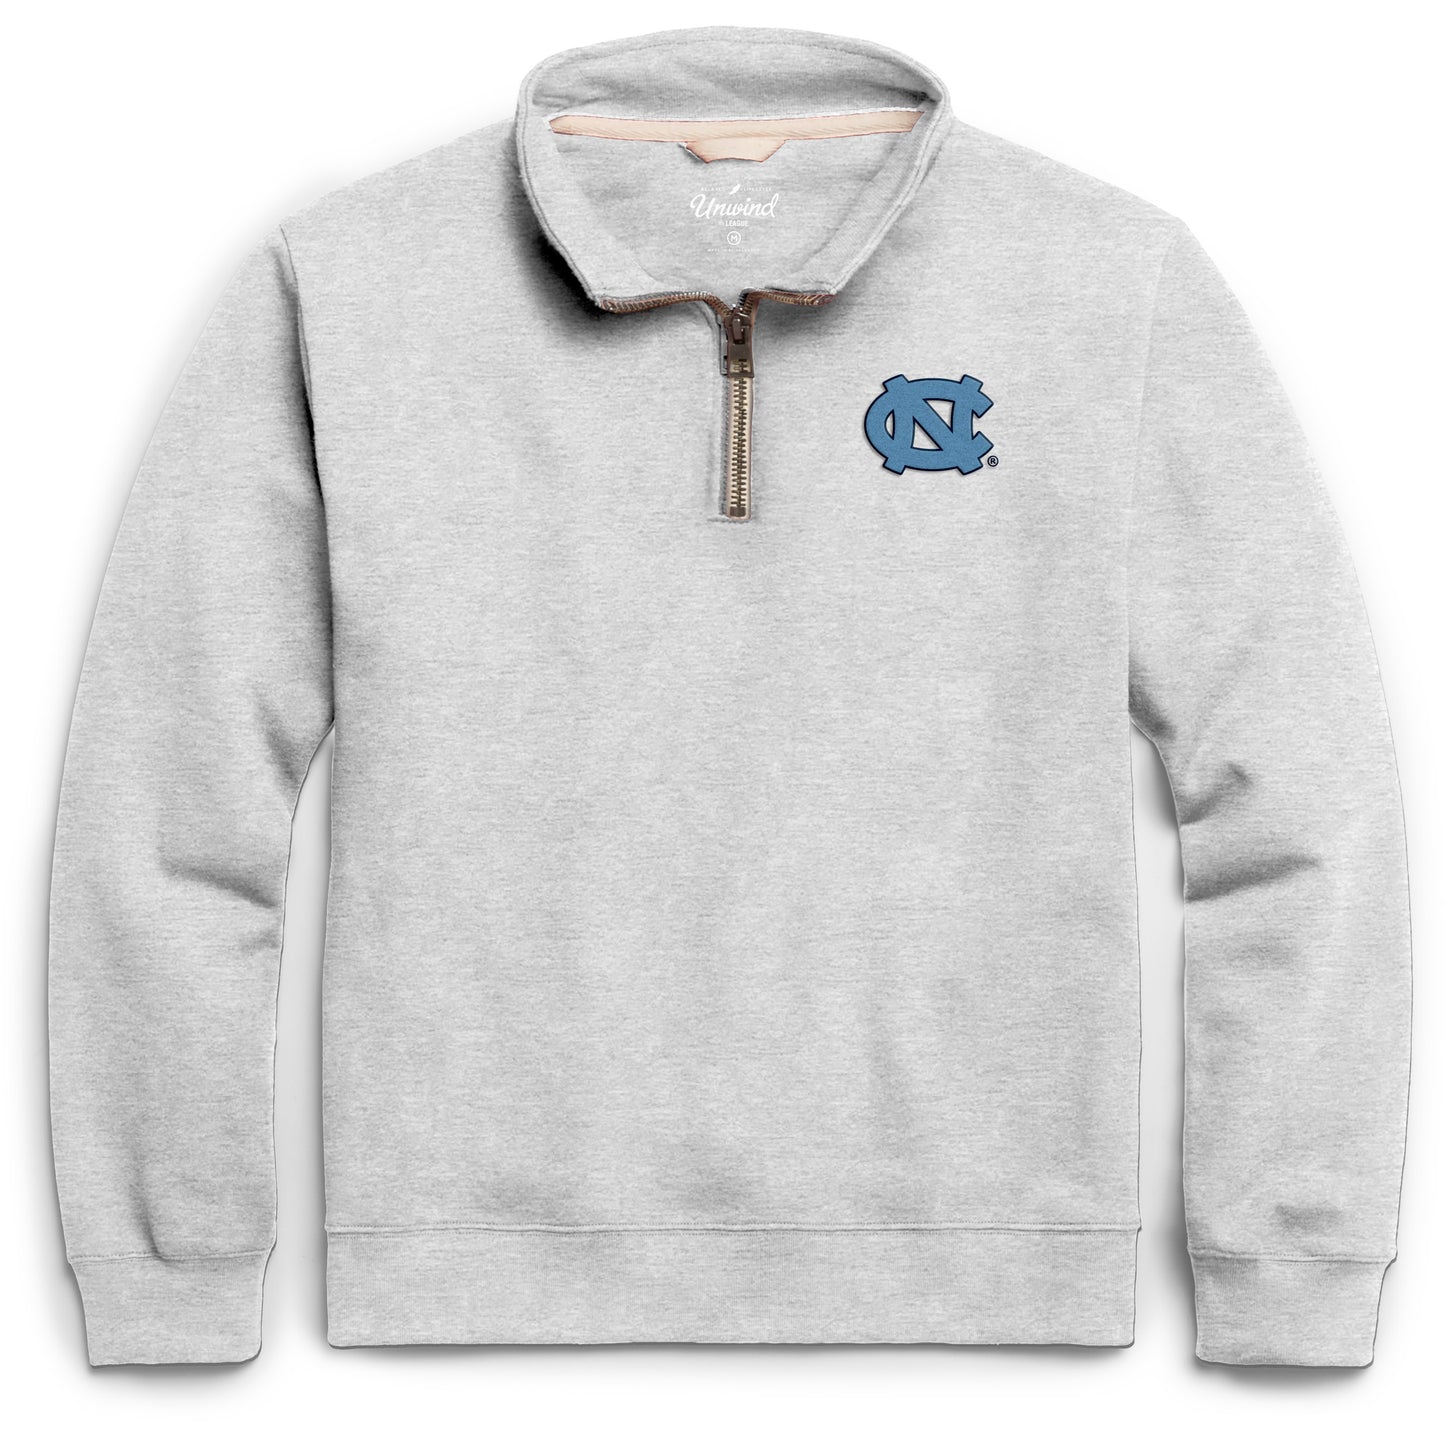 North Carolina Quarter Zip Sweatshirt in Classic Grey with UNC Logo